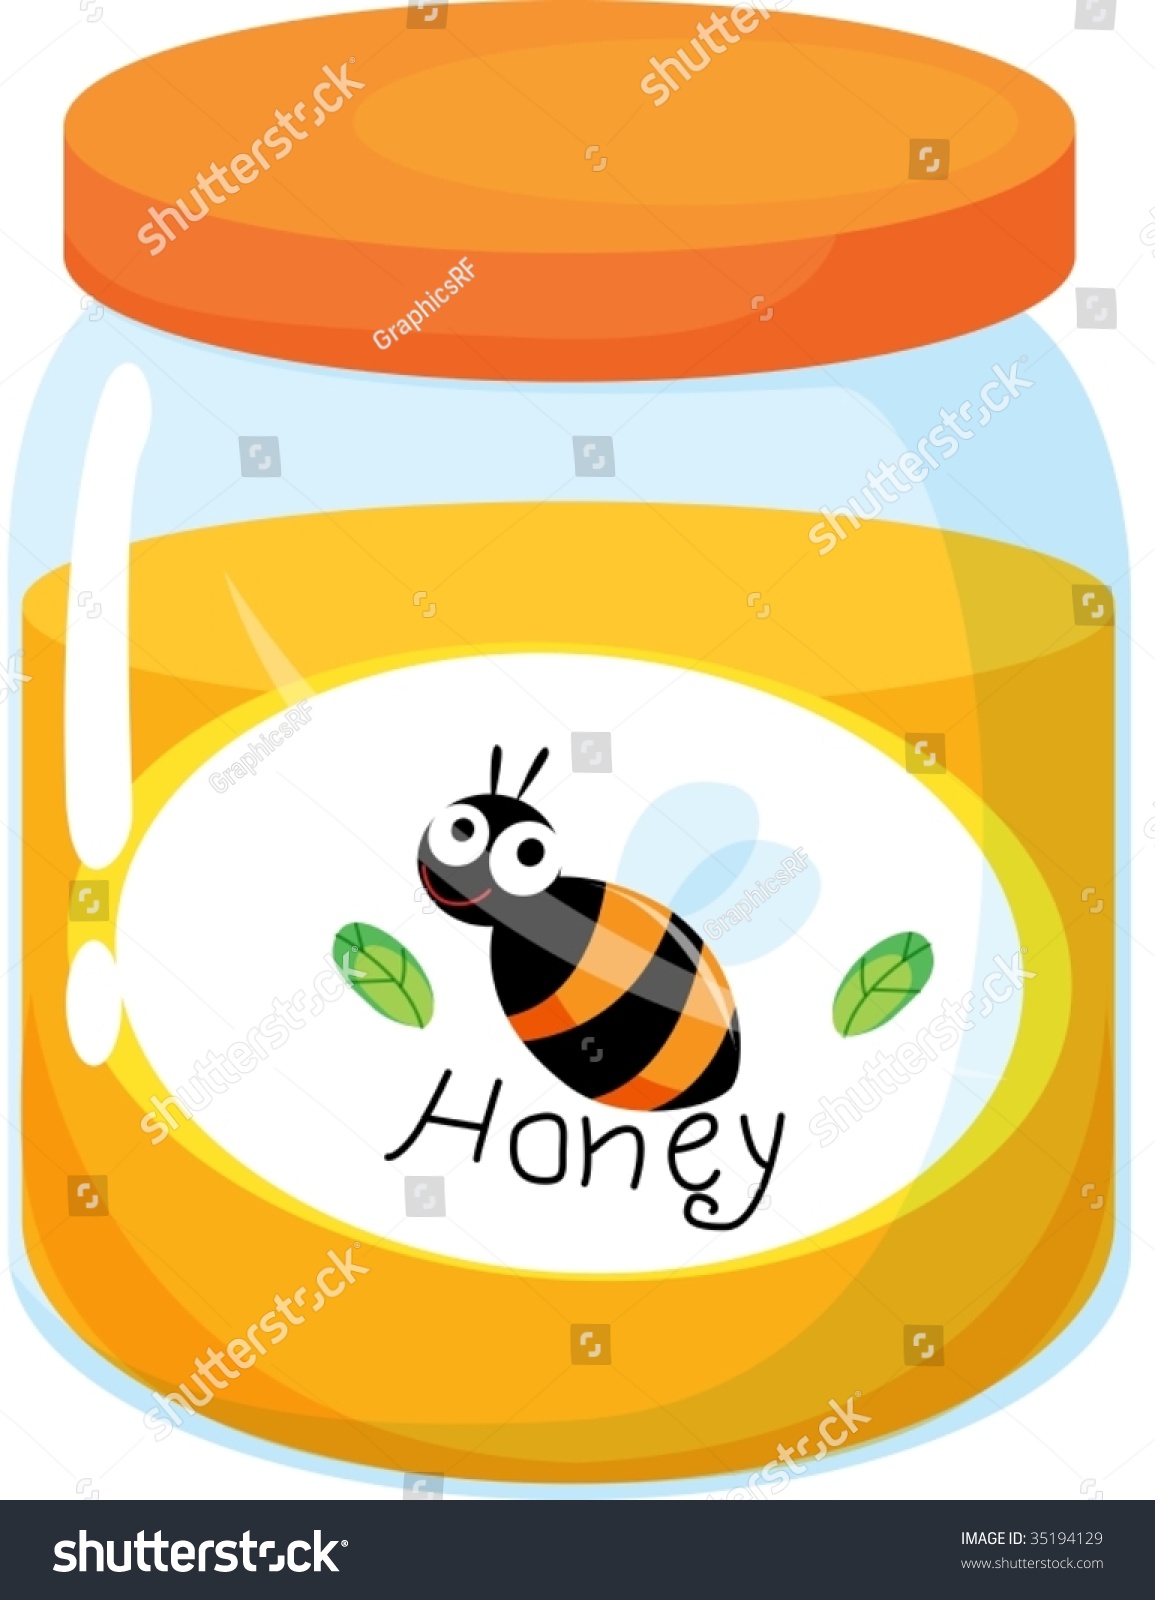 honey label clip art - photo #24